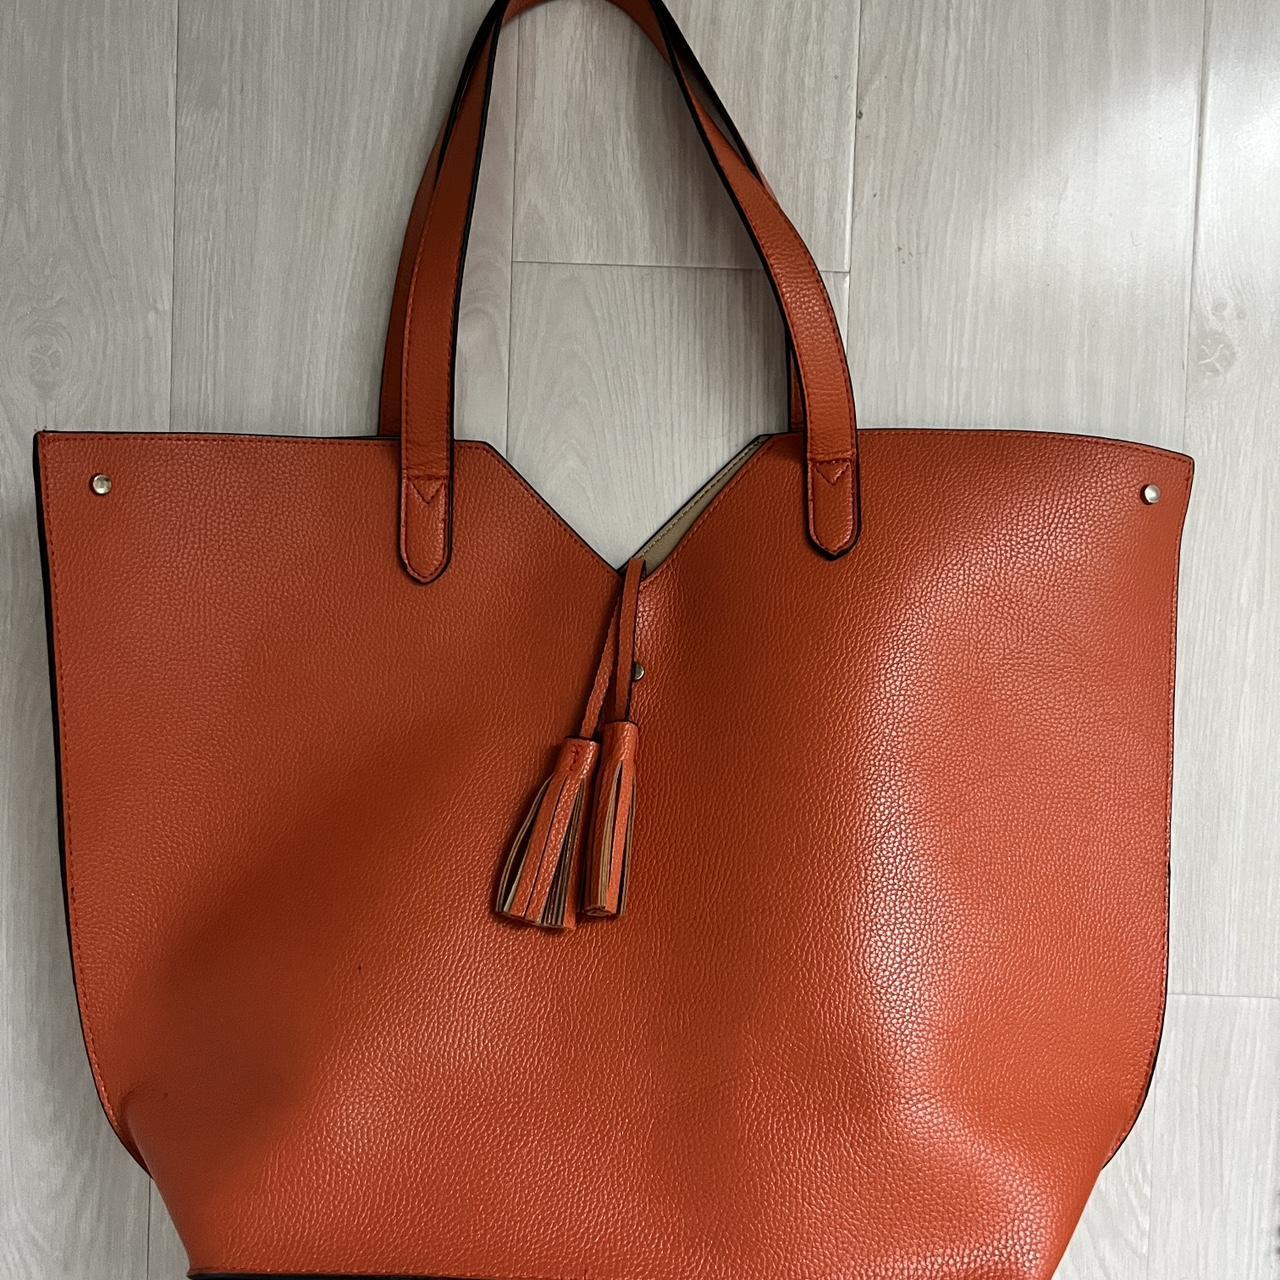 Neiman Marcus Gold Laser Cut Large Shopping Bag Open Purse Tote Bag Handbag  | eBay